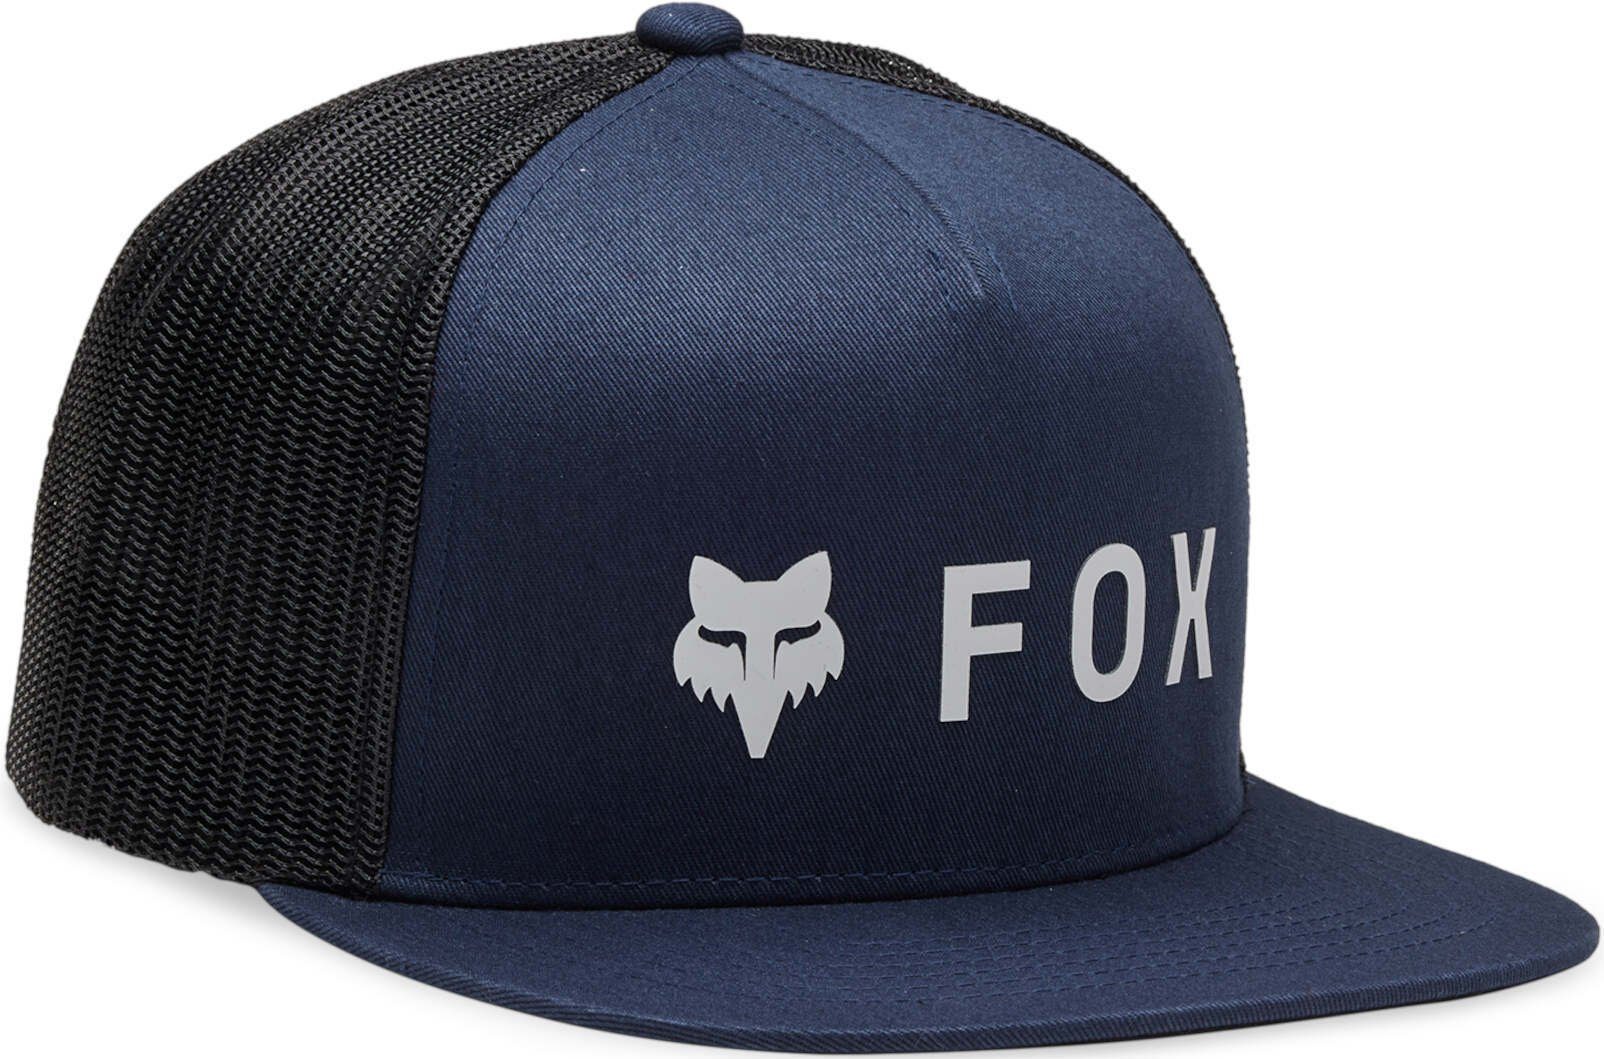 Fox Outdoorhut Absolute Mesh Snapback Kappe Blue/Black | Hüte